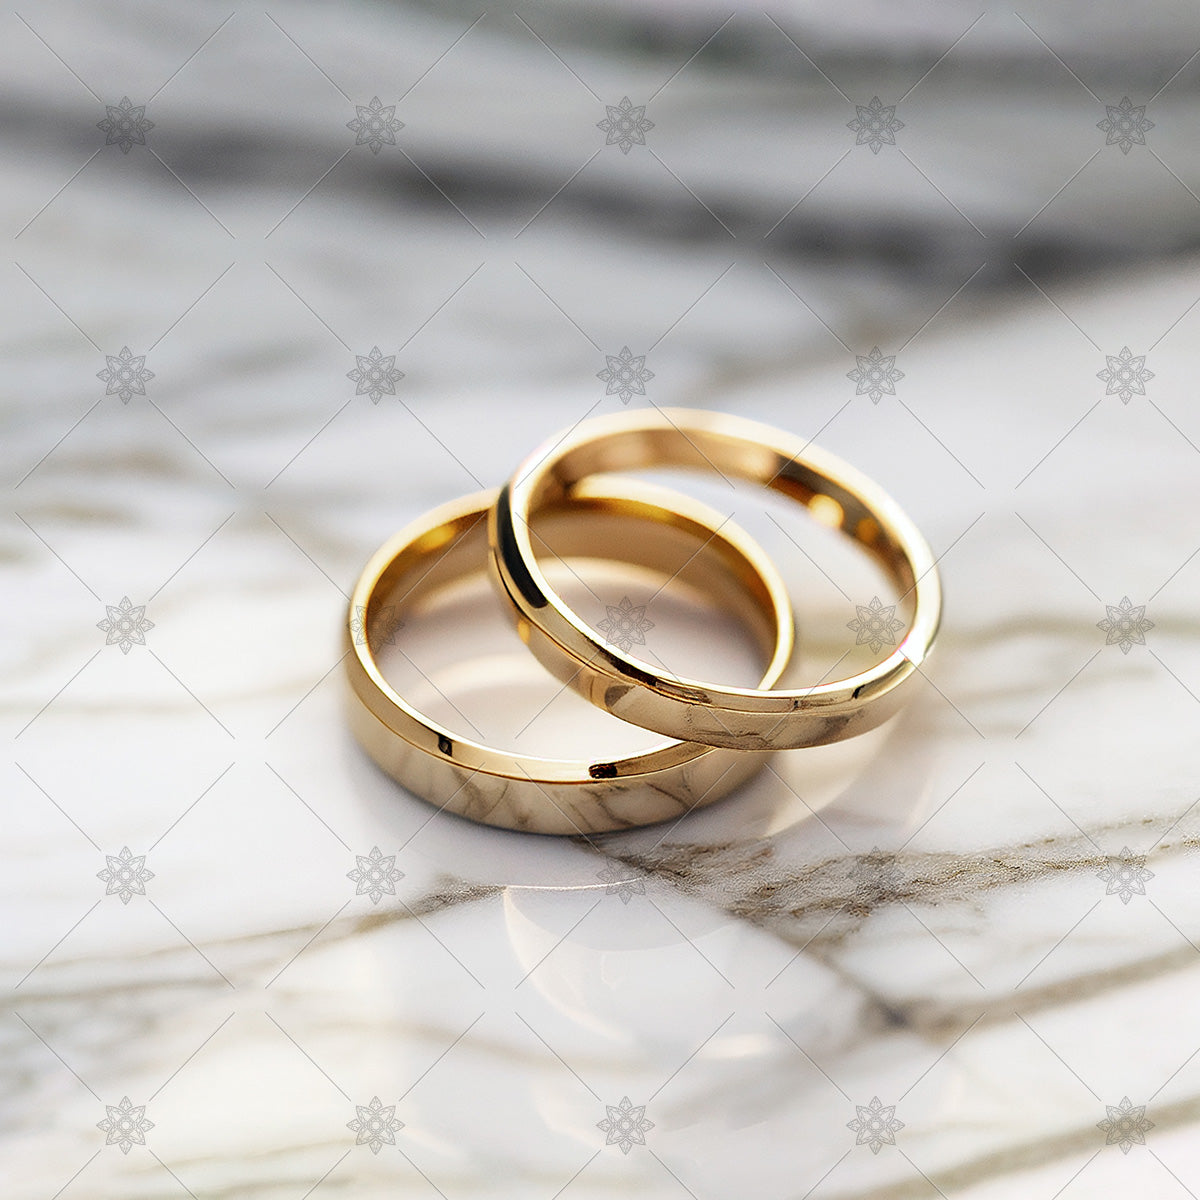 Couples wedding rings set - AI1019